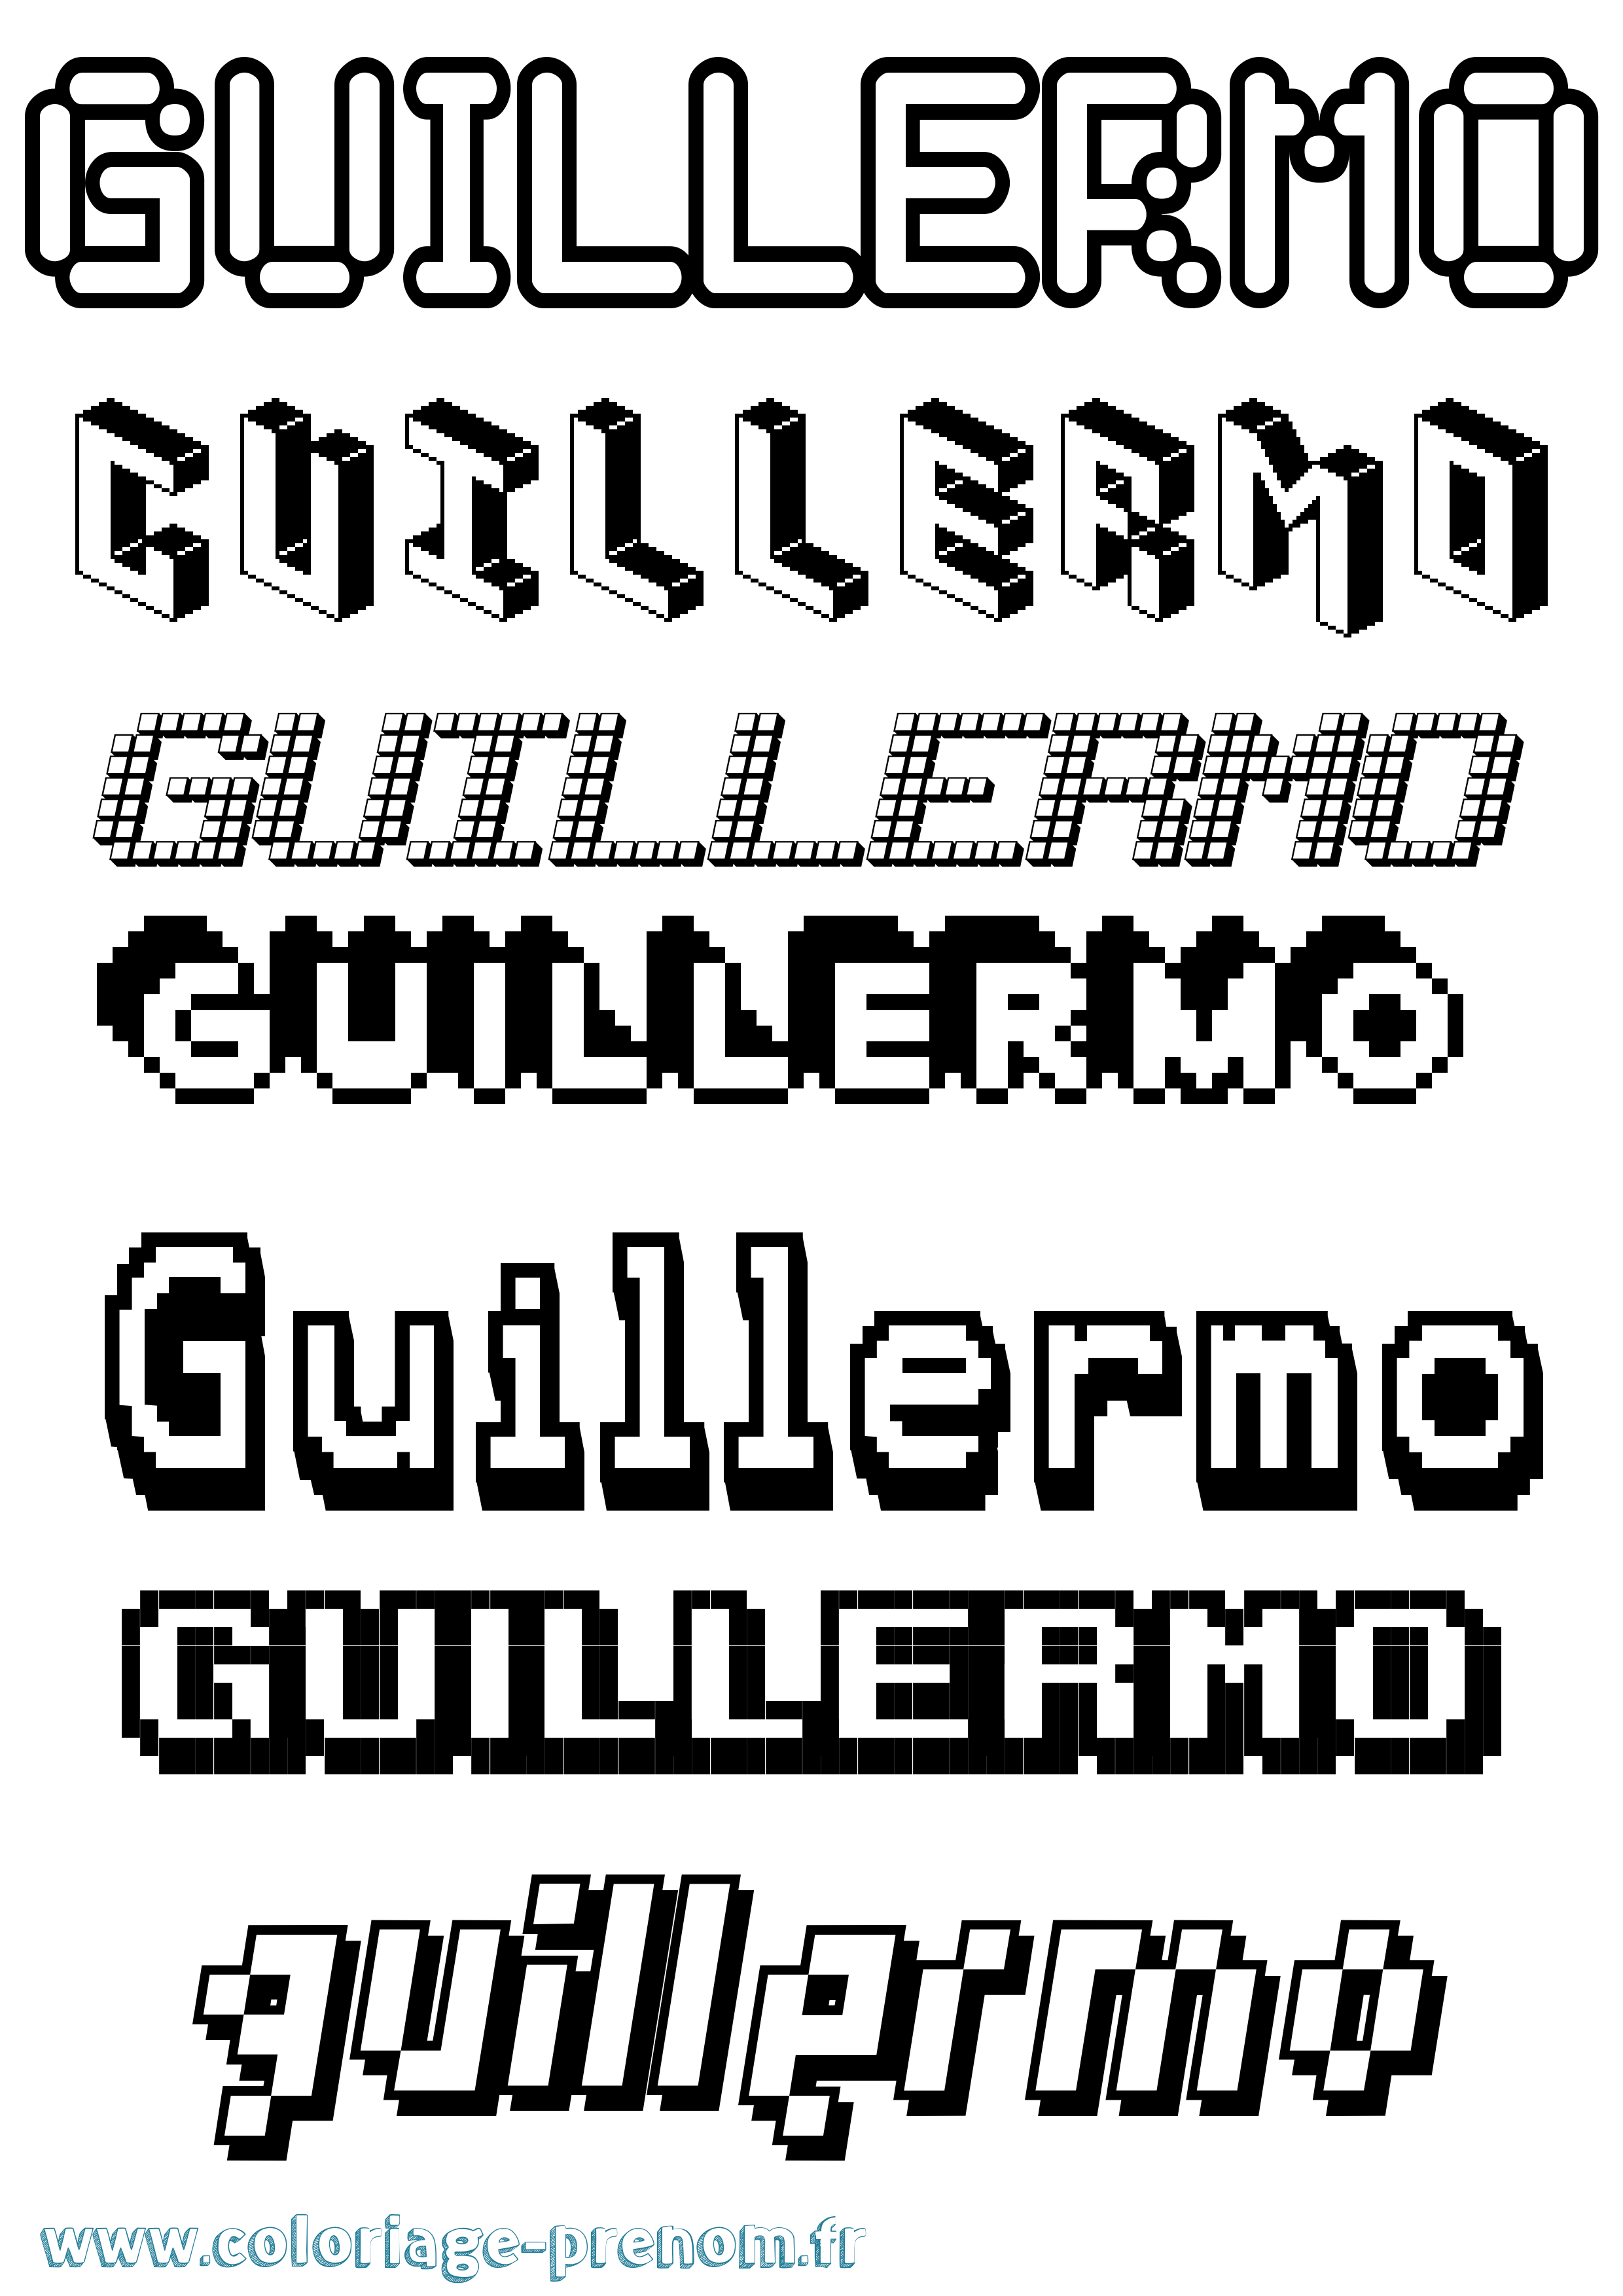 Coloriage prénom Guillermo Pixel